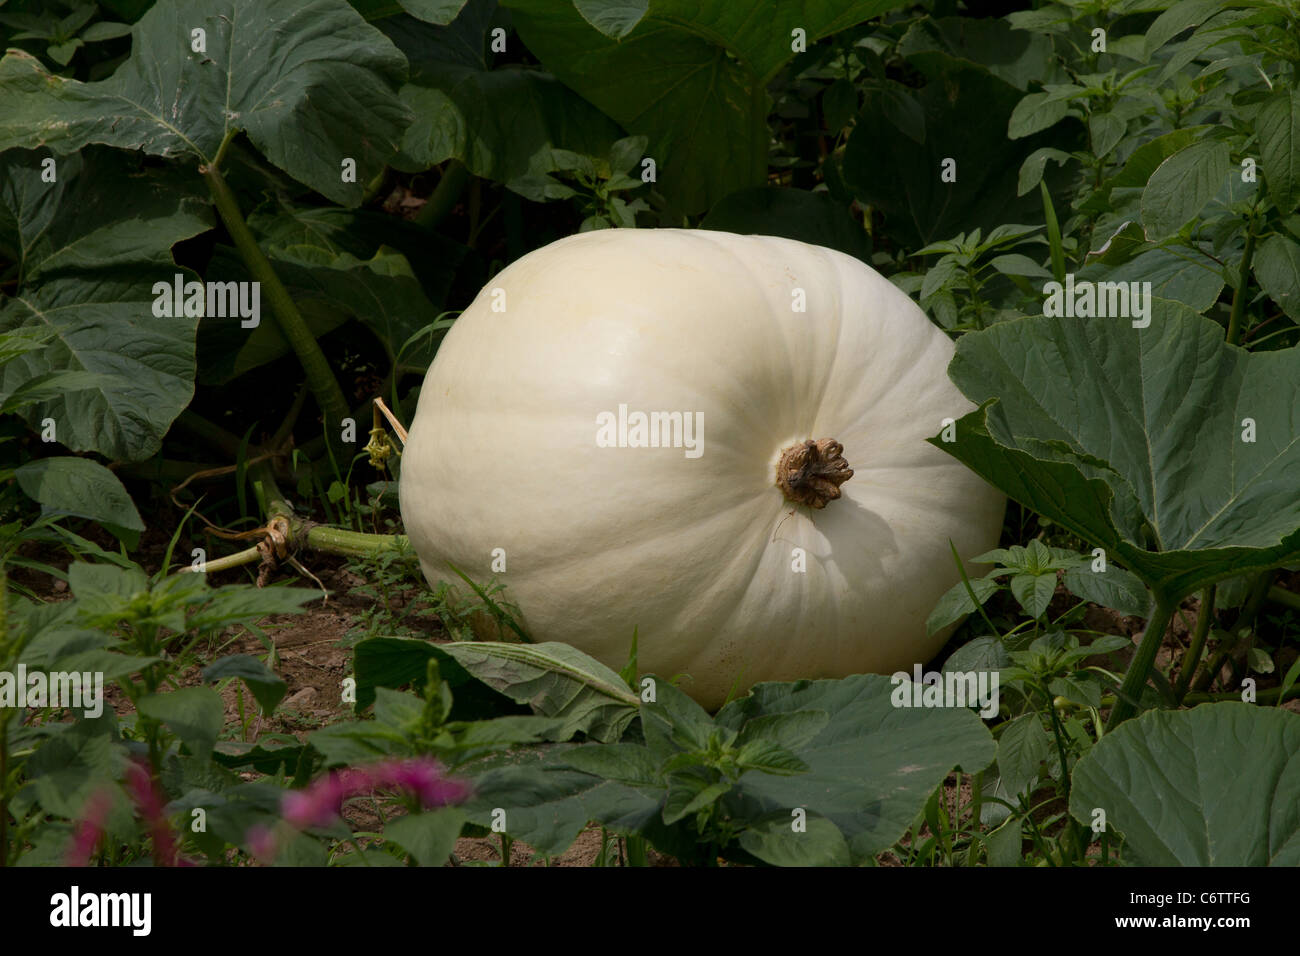 Giant pumpkin growing in a garden Stock Photo - Alamy